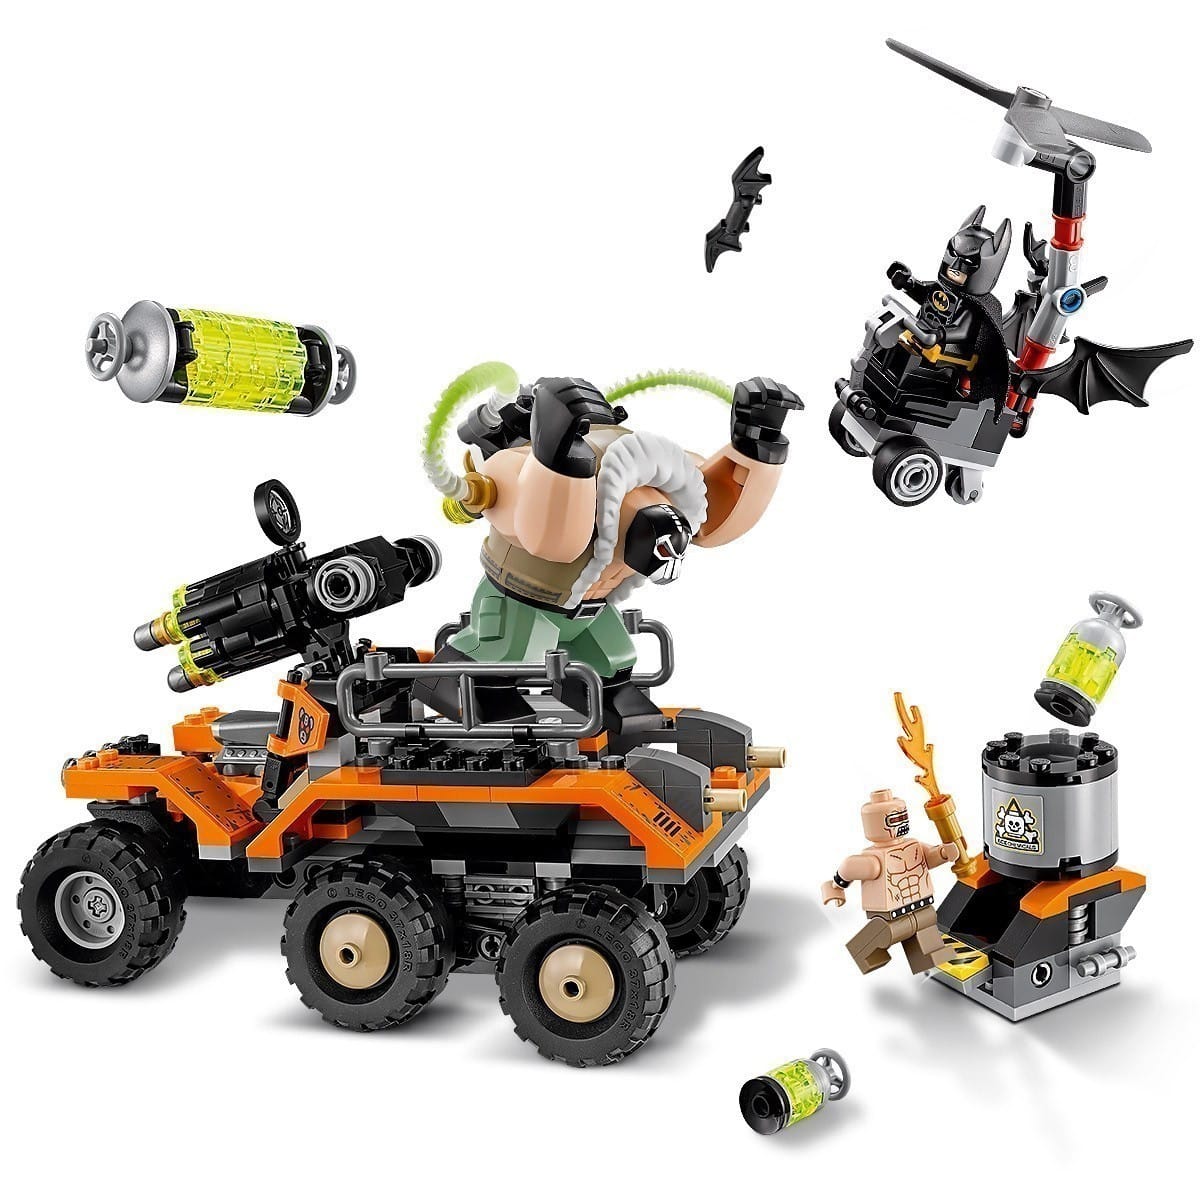 LEGO - The Batman Movie - 70914 Bane Toxic Truck Attack